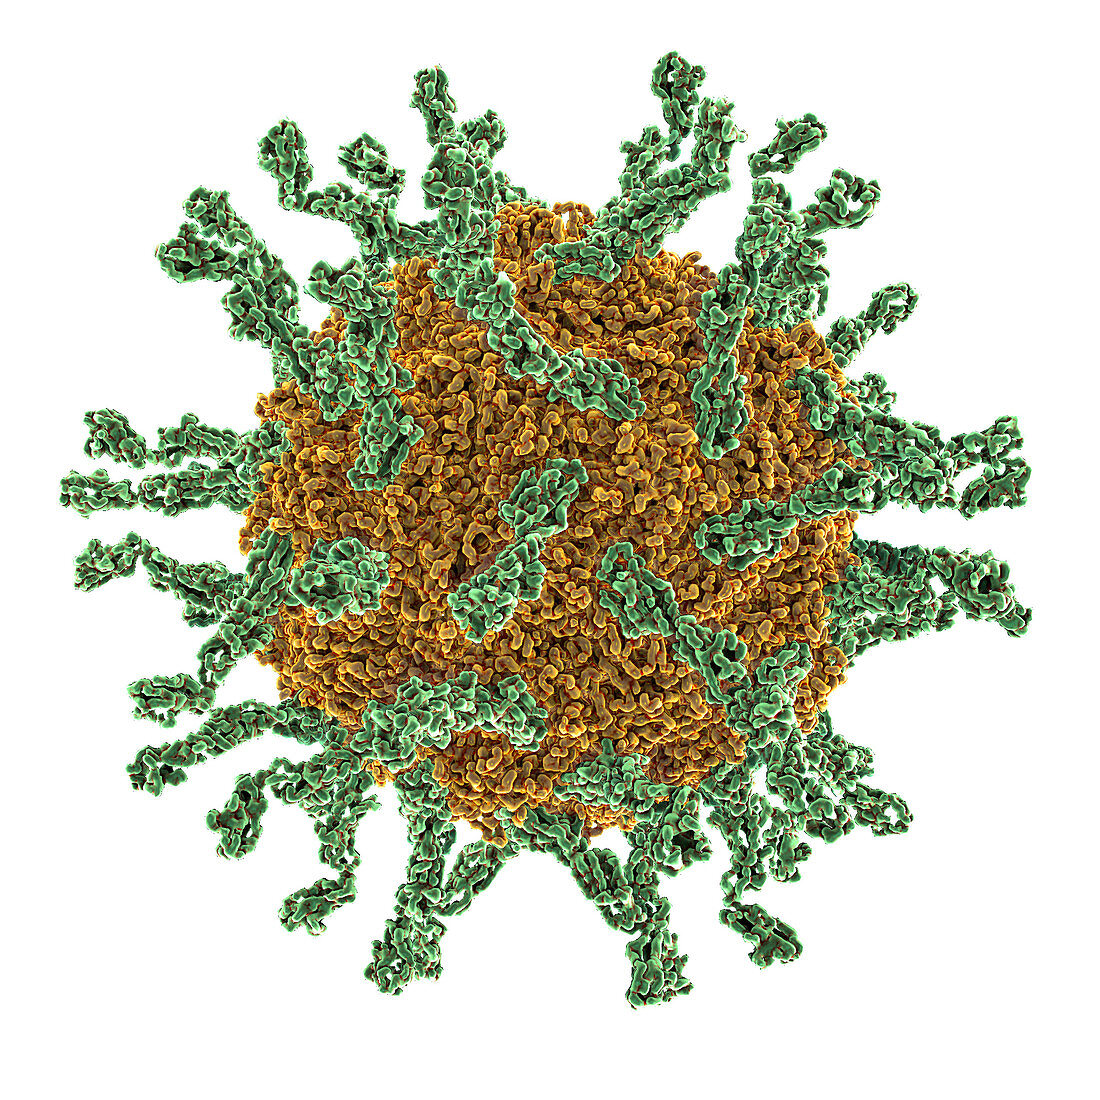 Poliovirus Type I,illustration